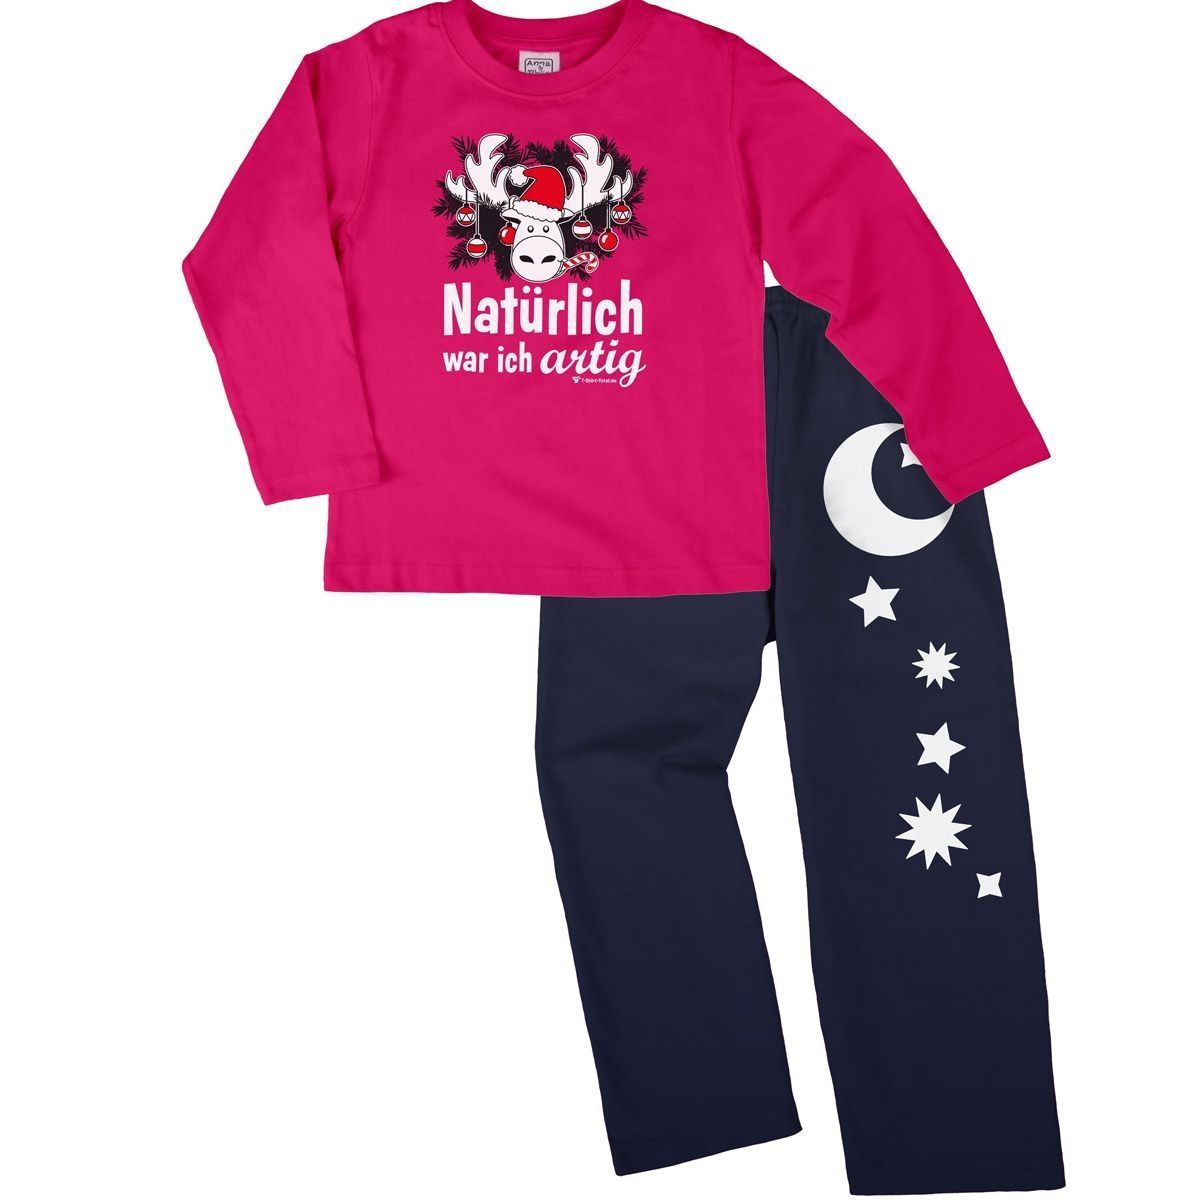 Natürlich artig Pyjama Set pink / navy 68 / 74